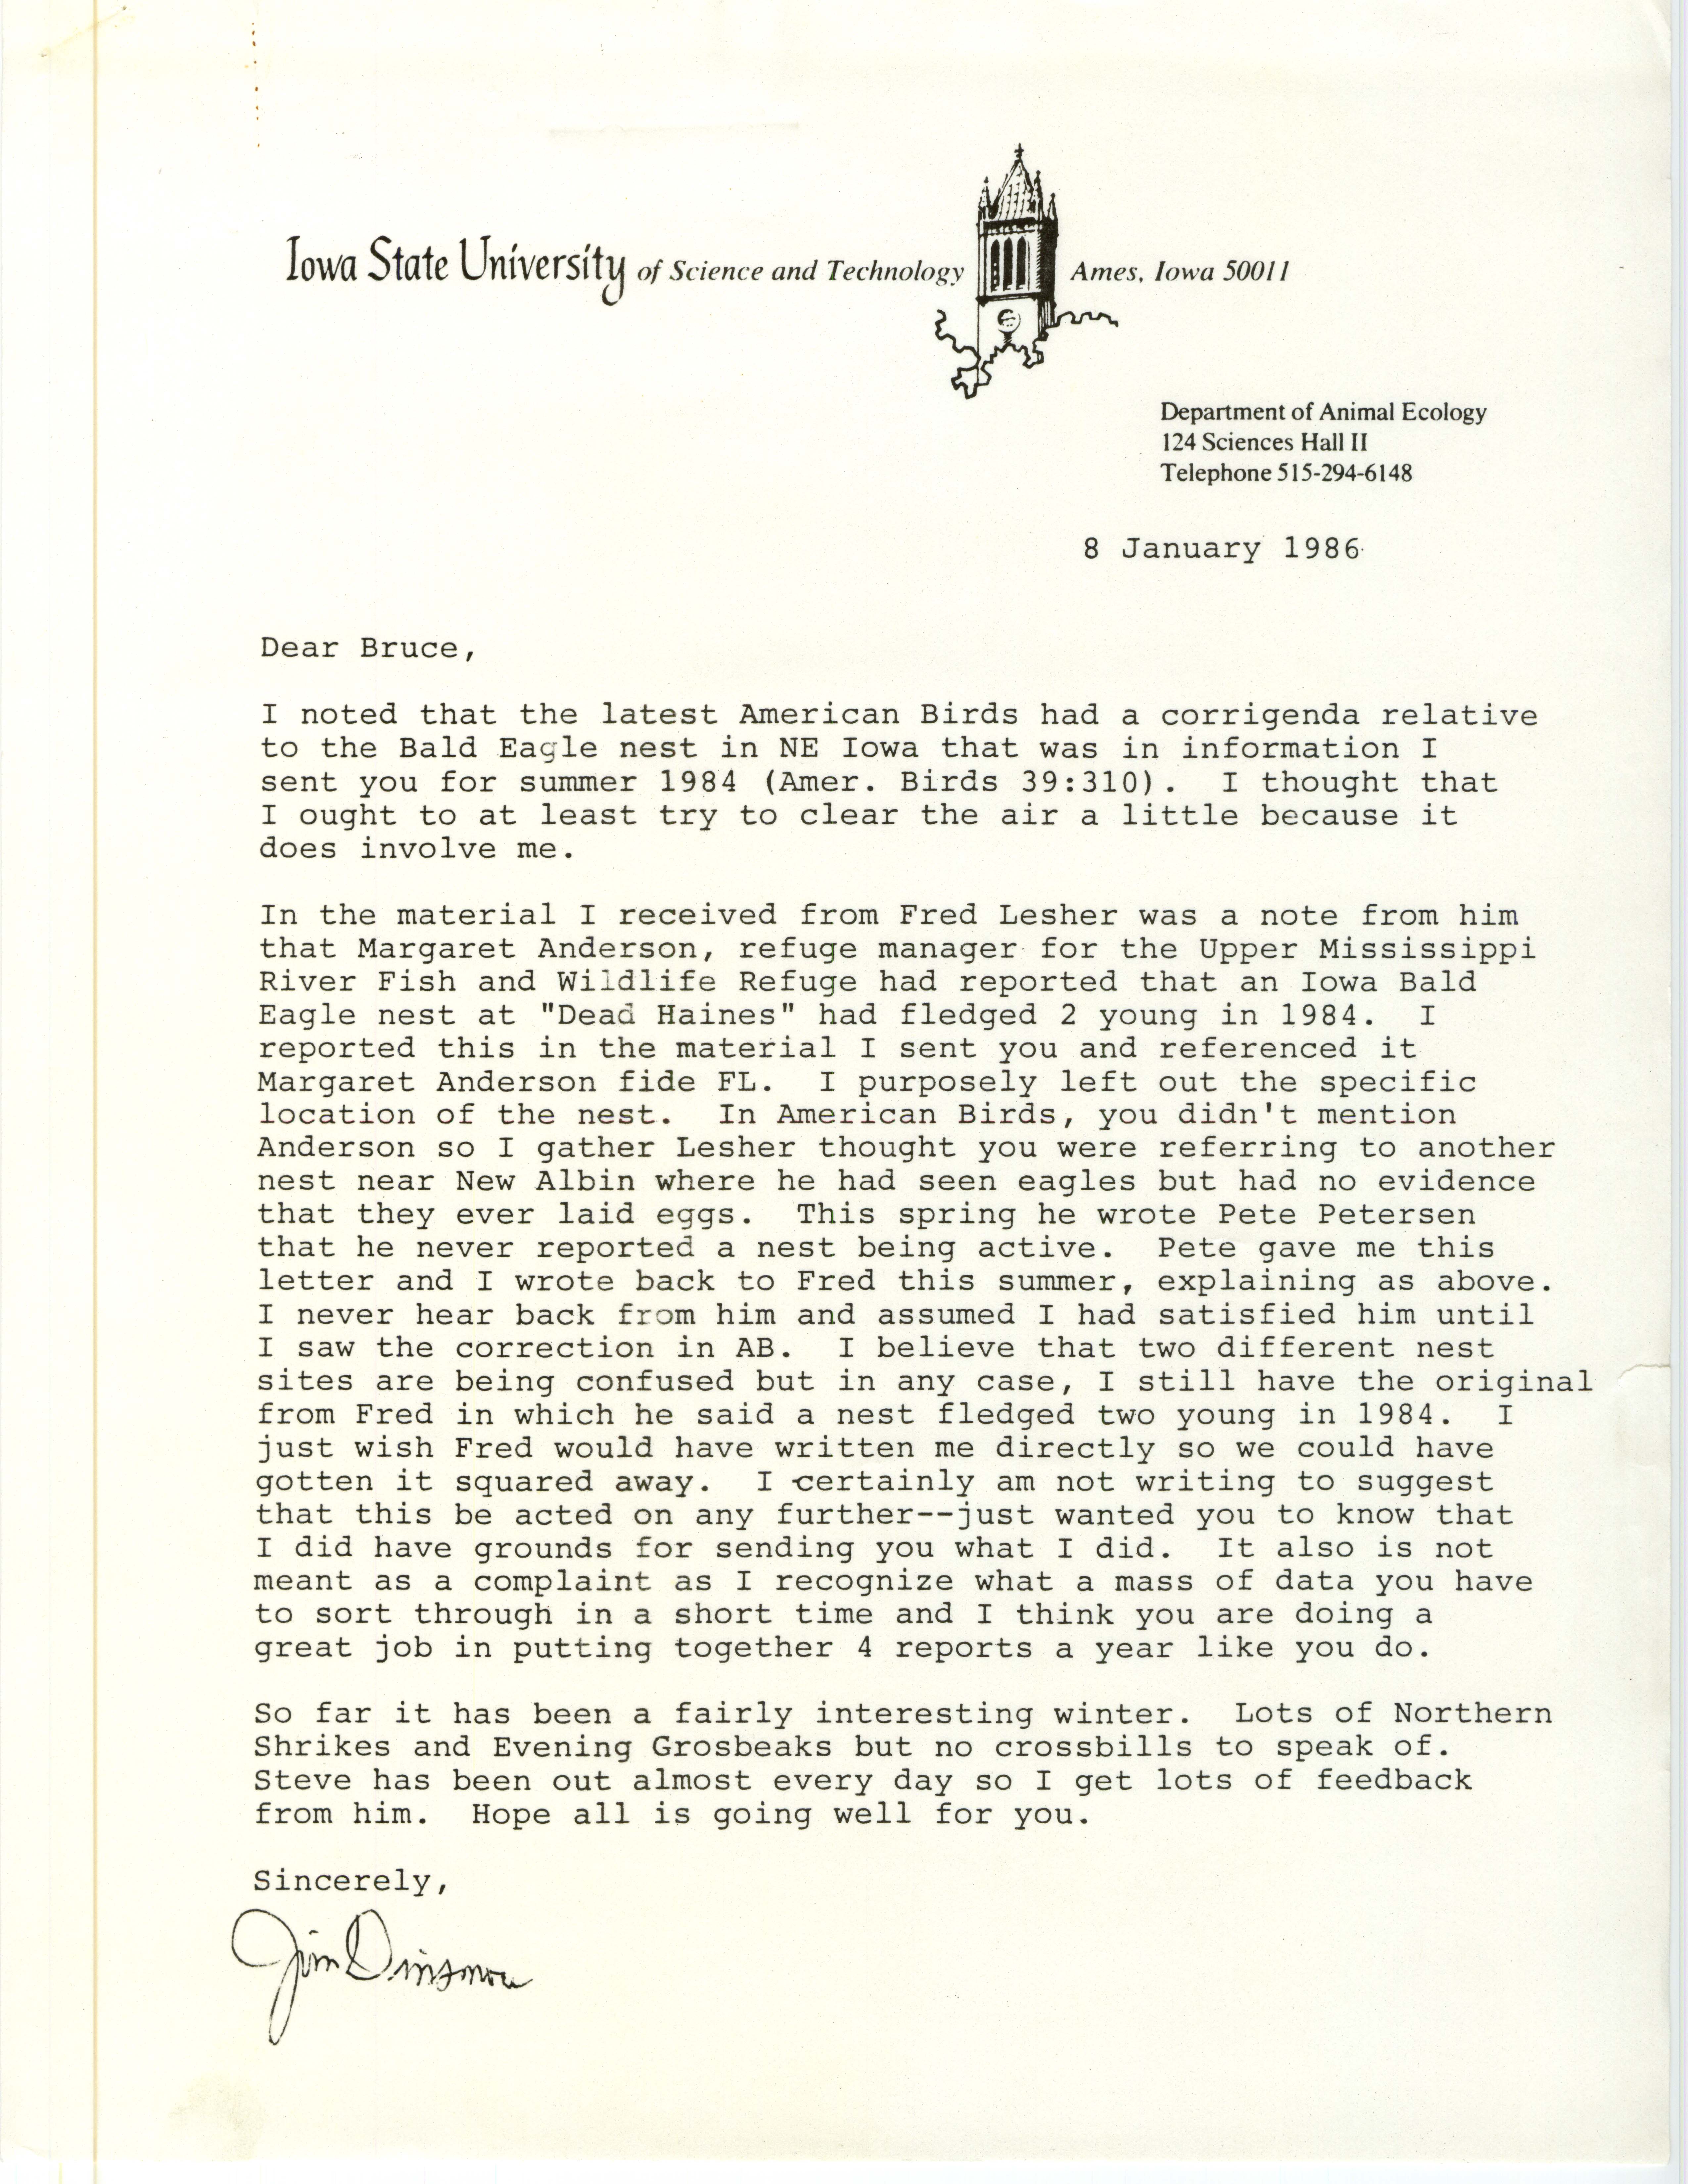 James J. Dinsmore letter to Bruce G. Peterjohn regarding location of a Bald Eagle nest, January 8, 1986